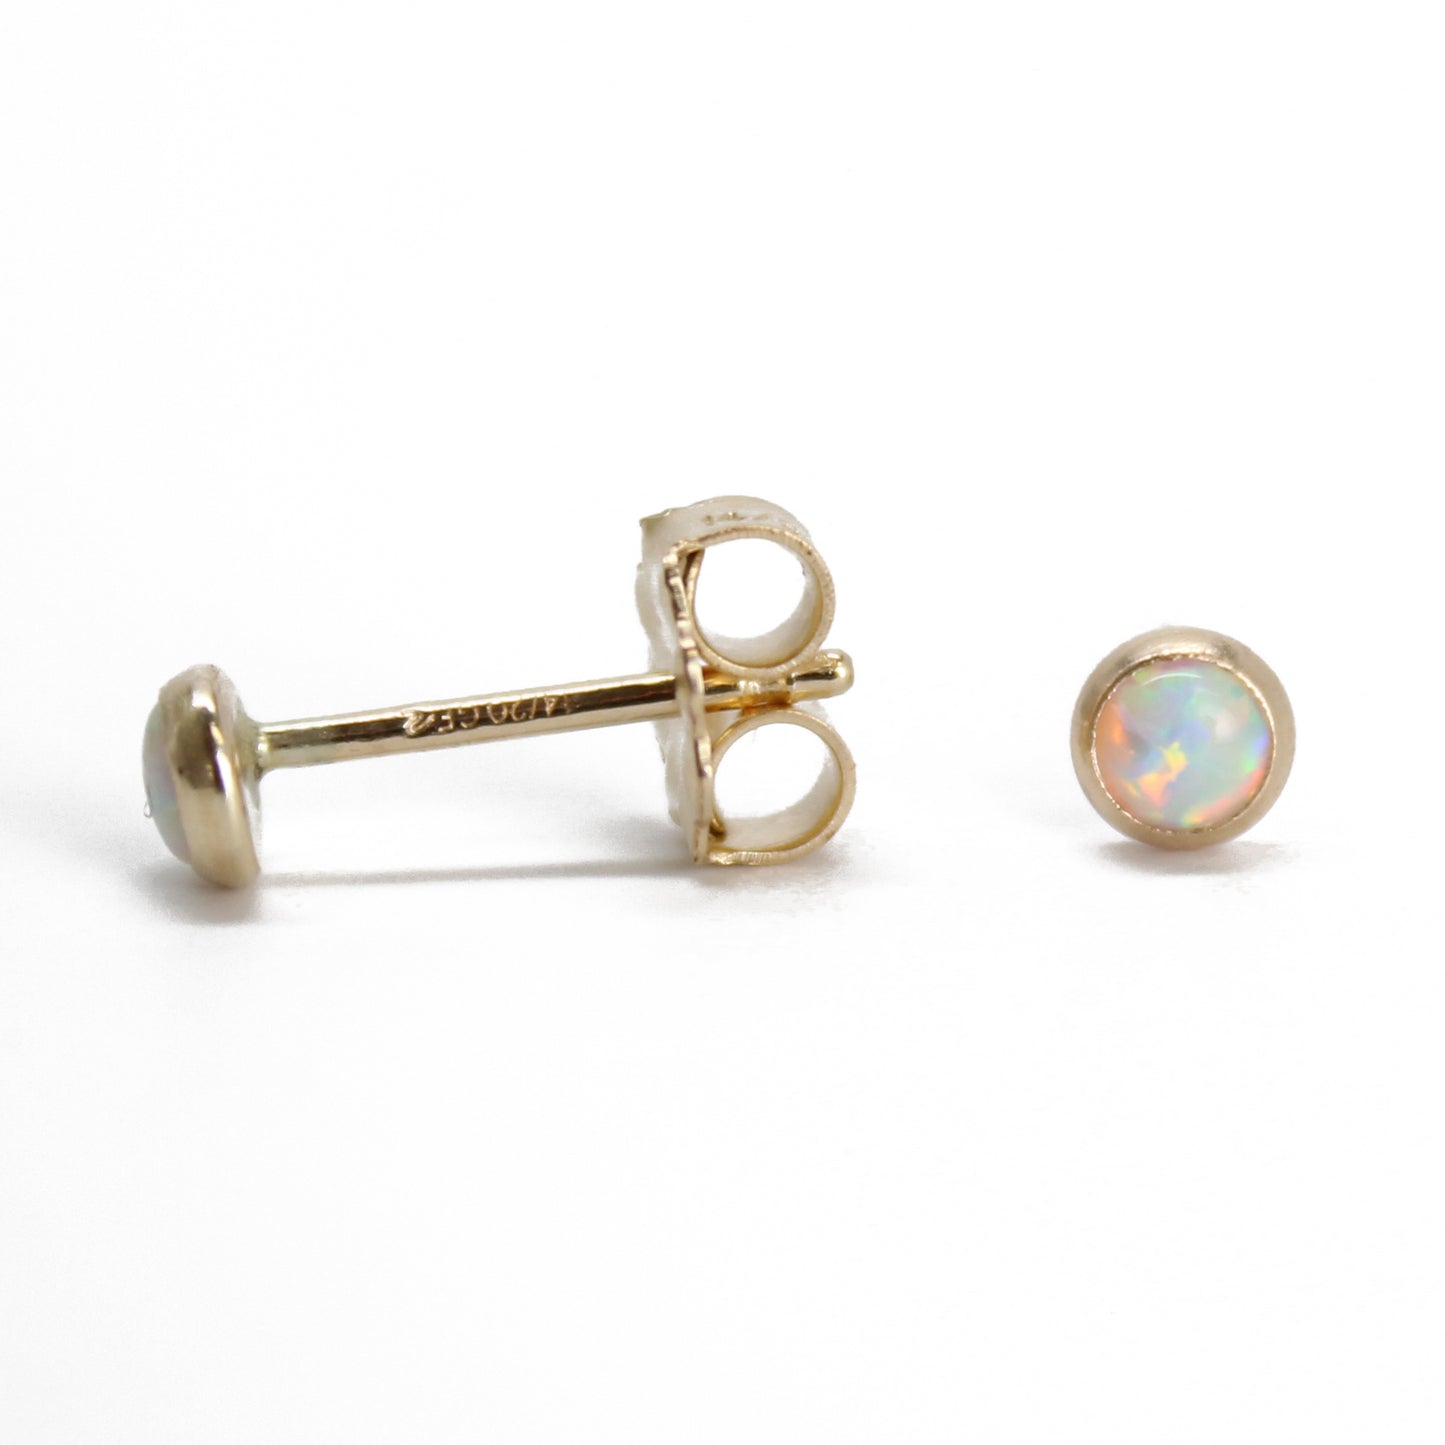 3mm opal studs in gold